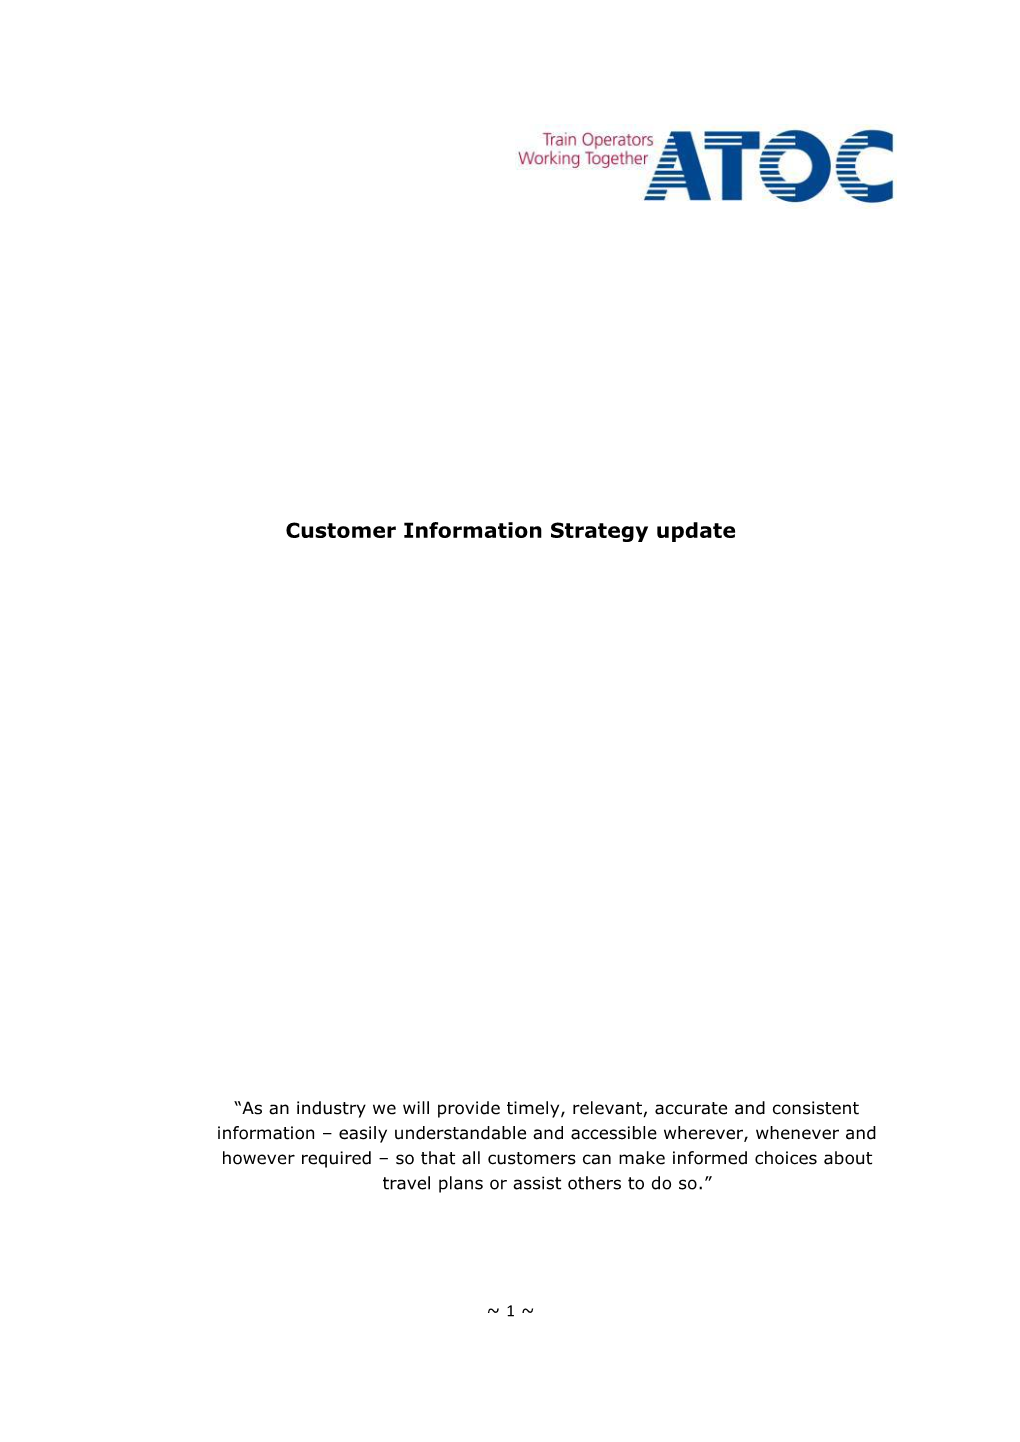 Customer Information Strategy Update